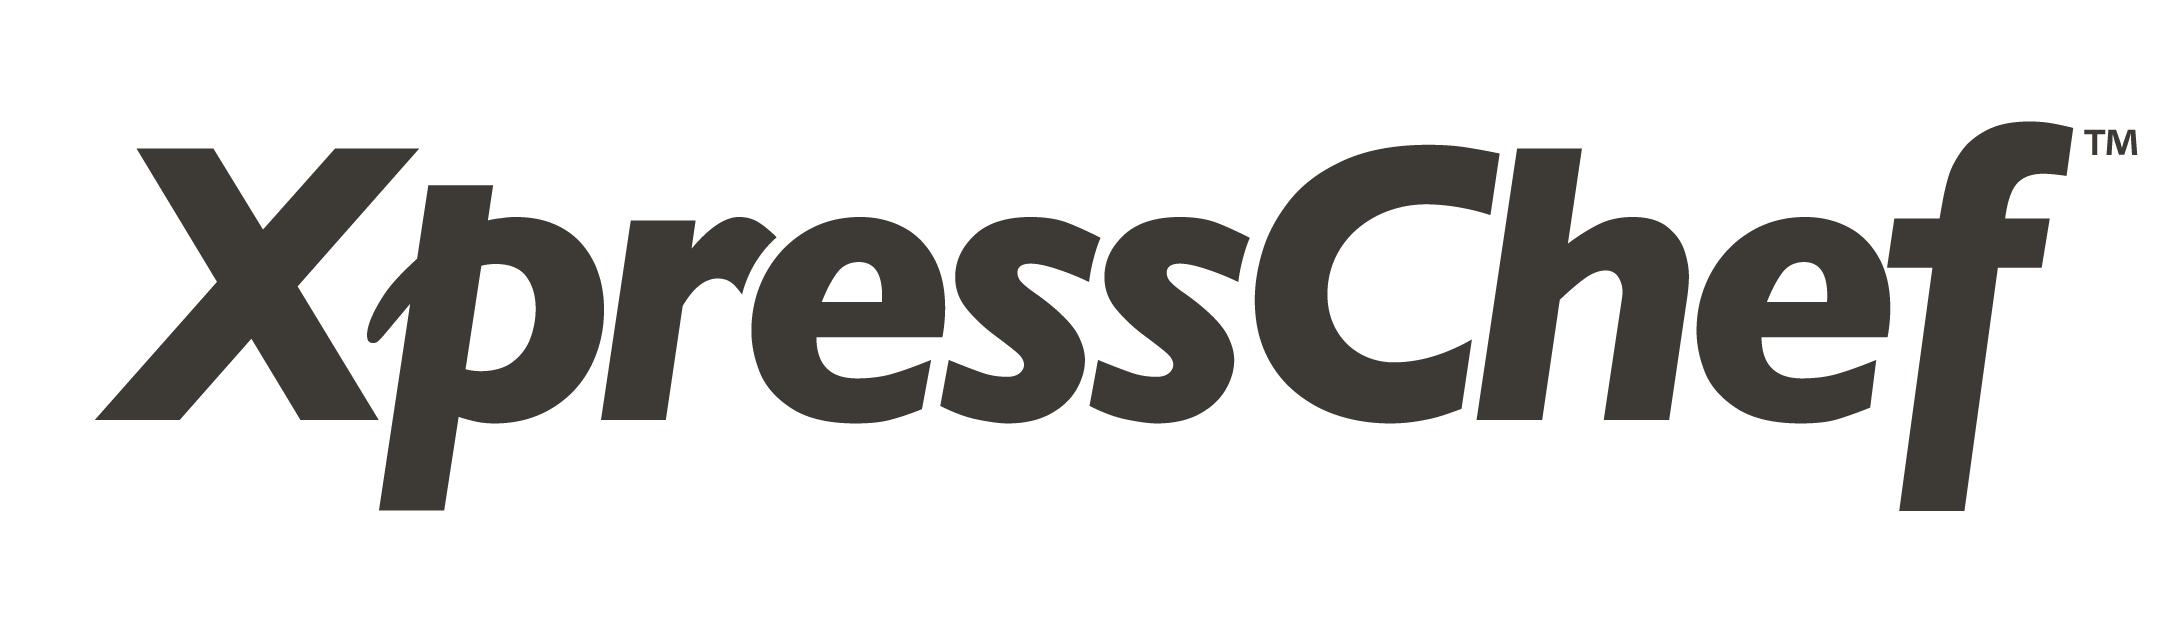 Xpress Chef Logo w TM